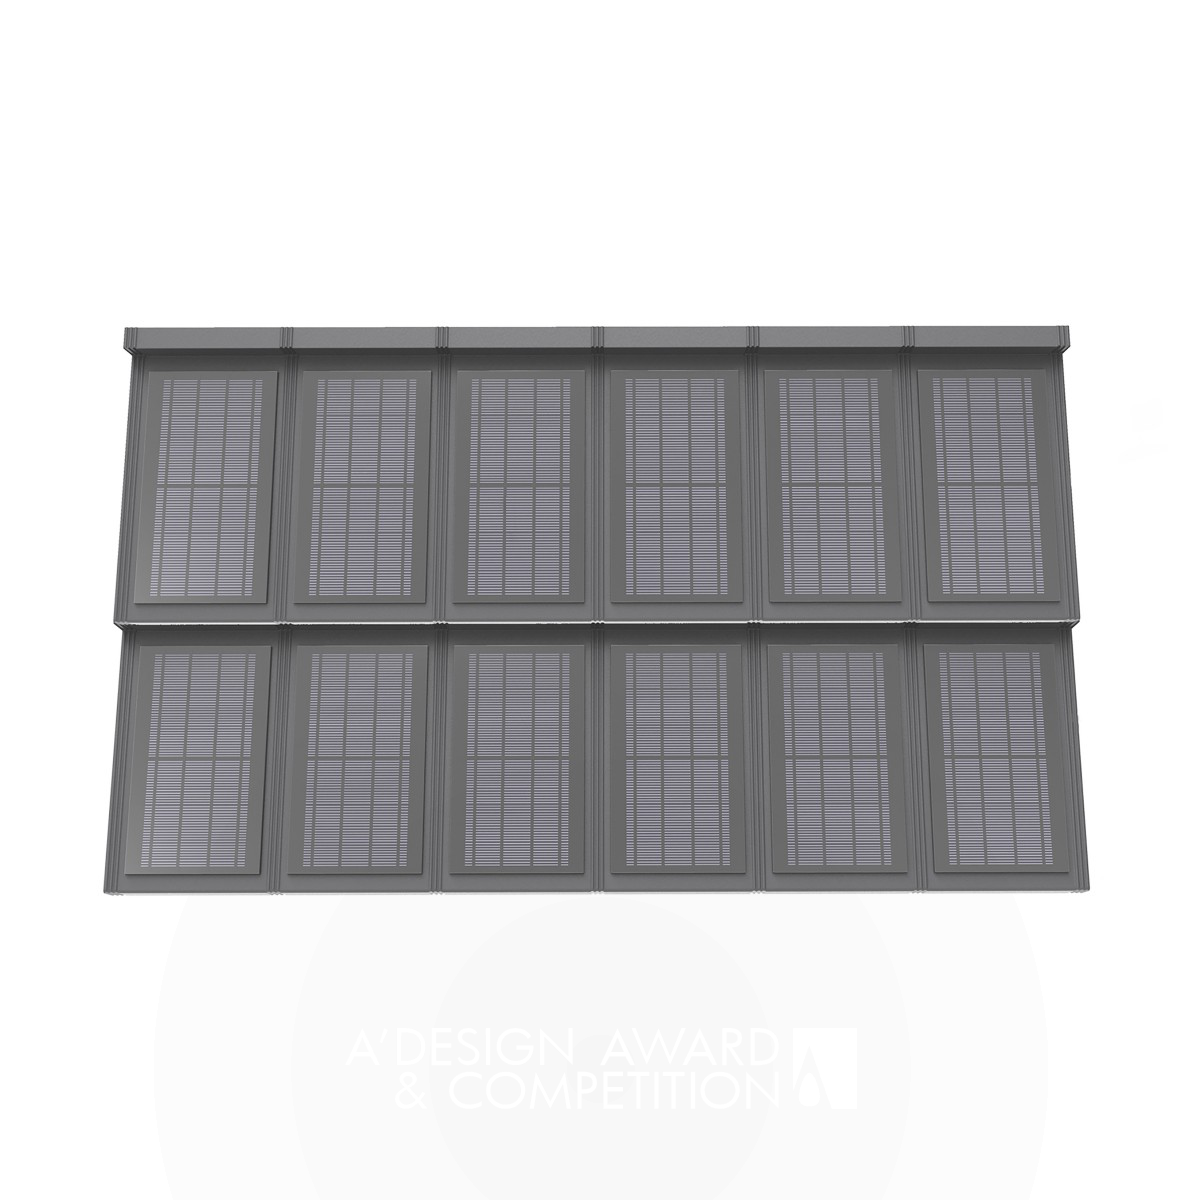 Etile Photovoltaic Metal Roof  by Jarosław Markowicz